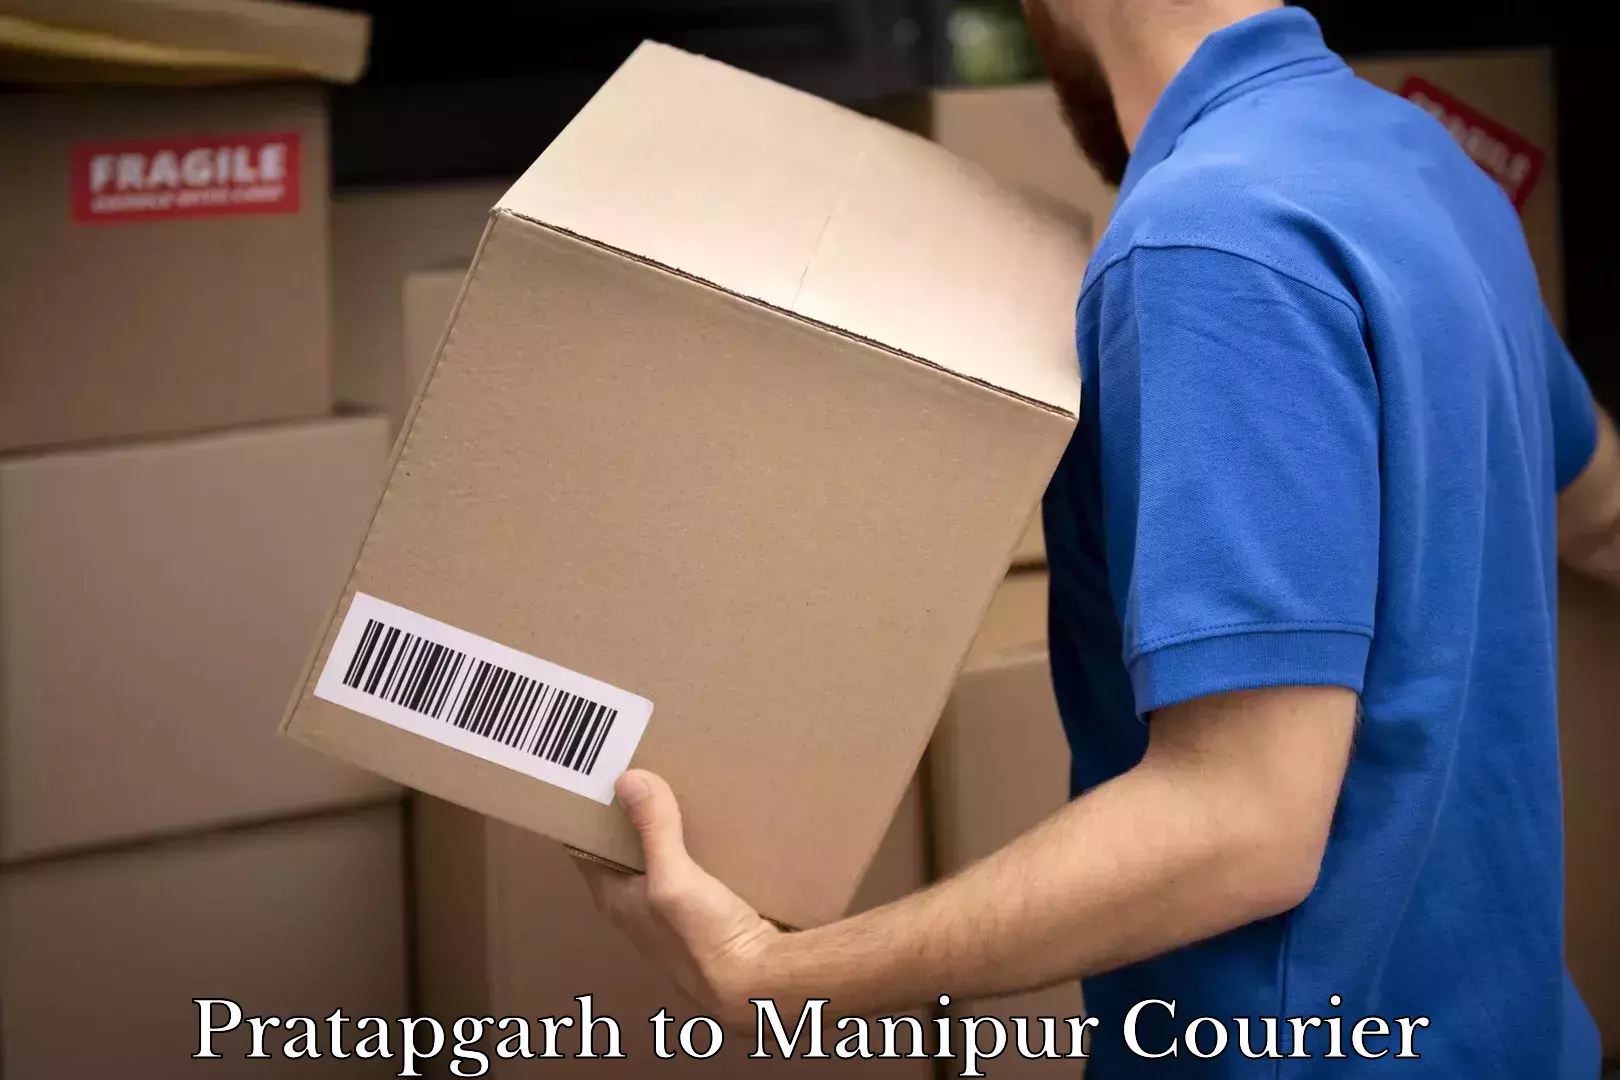 Courier service innovation Pratapgarh to Manipur